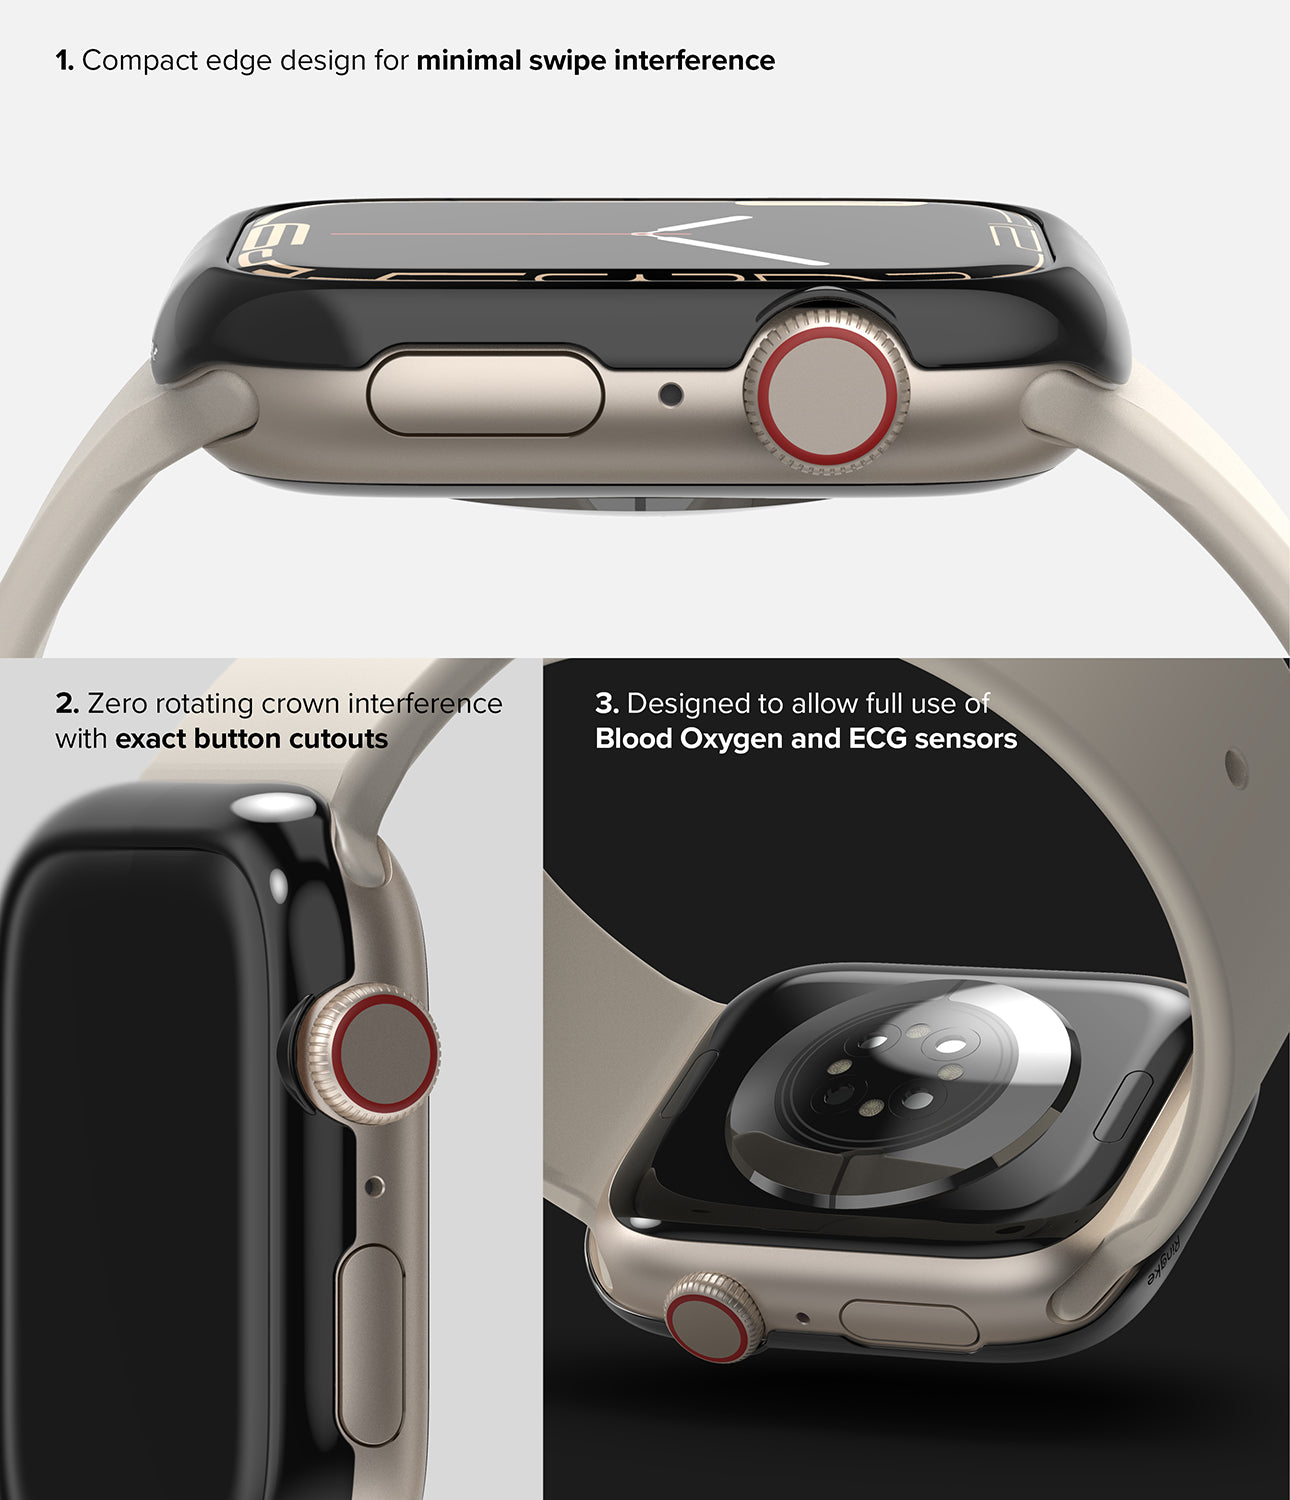 Apple Watch Series 41mm / Ringke Bezel Styling / 41-03 Black-Minimal Swipe Interference. Exact Button Cutouts. Blood Oxygen and ECG Sensors